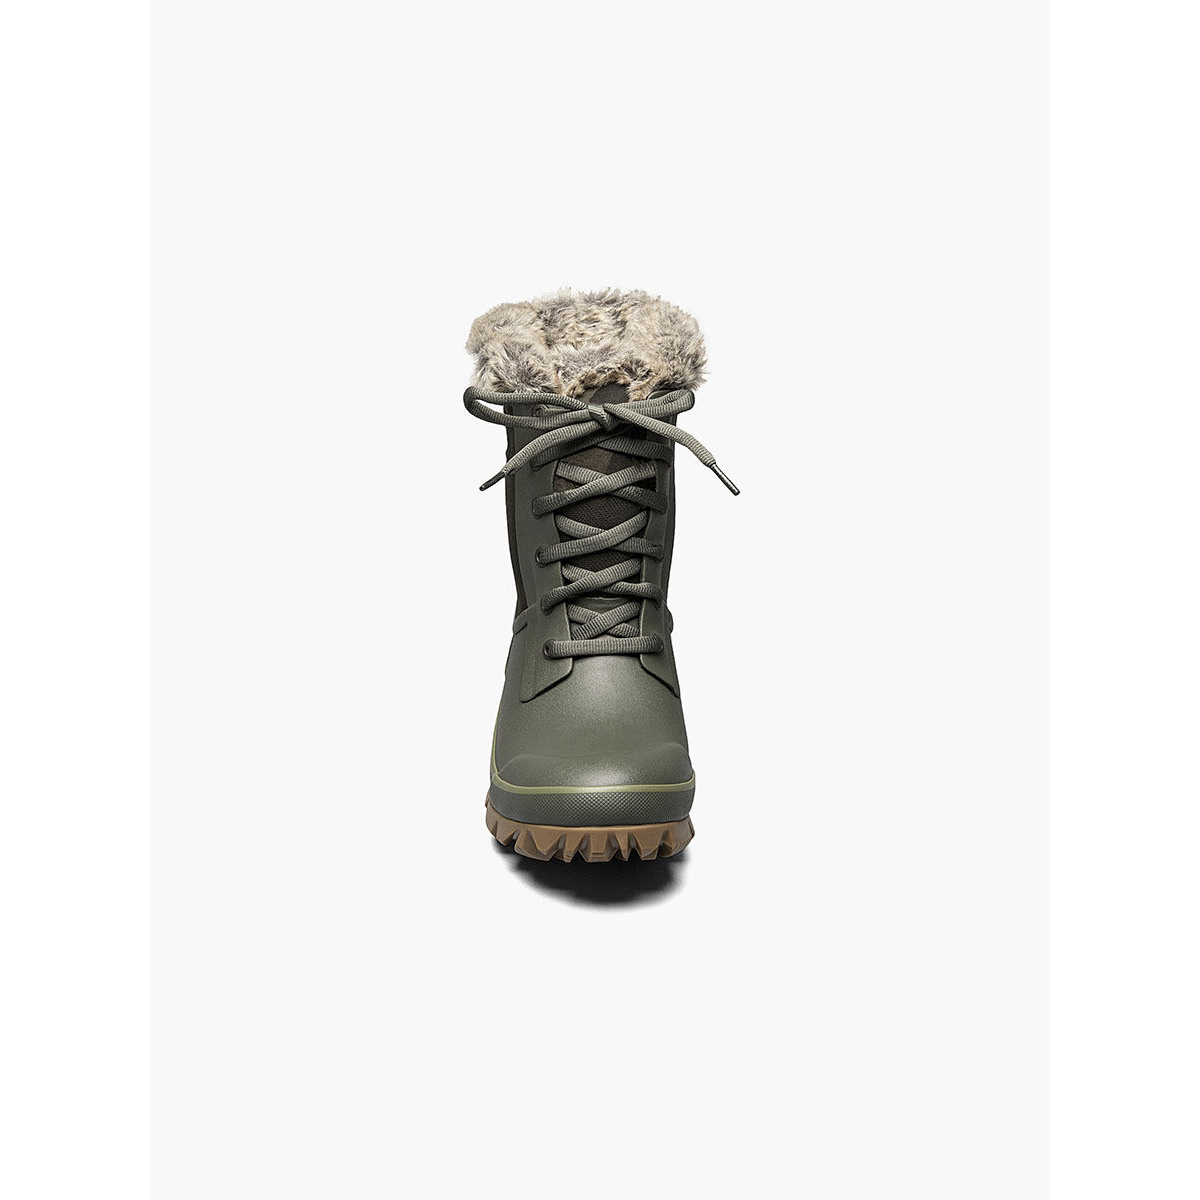 BOGS Women's Arcata Tontal Camo Waterproof Lace Up Snow Boots Dark Green - 72693-301 - Dark Green, 8